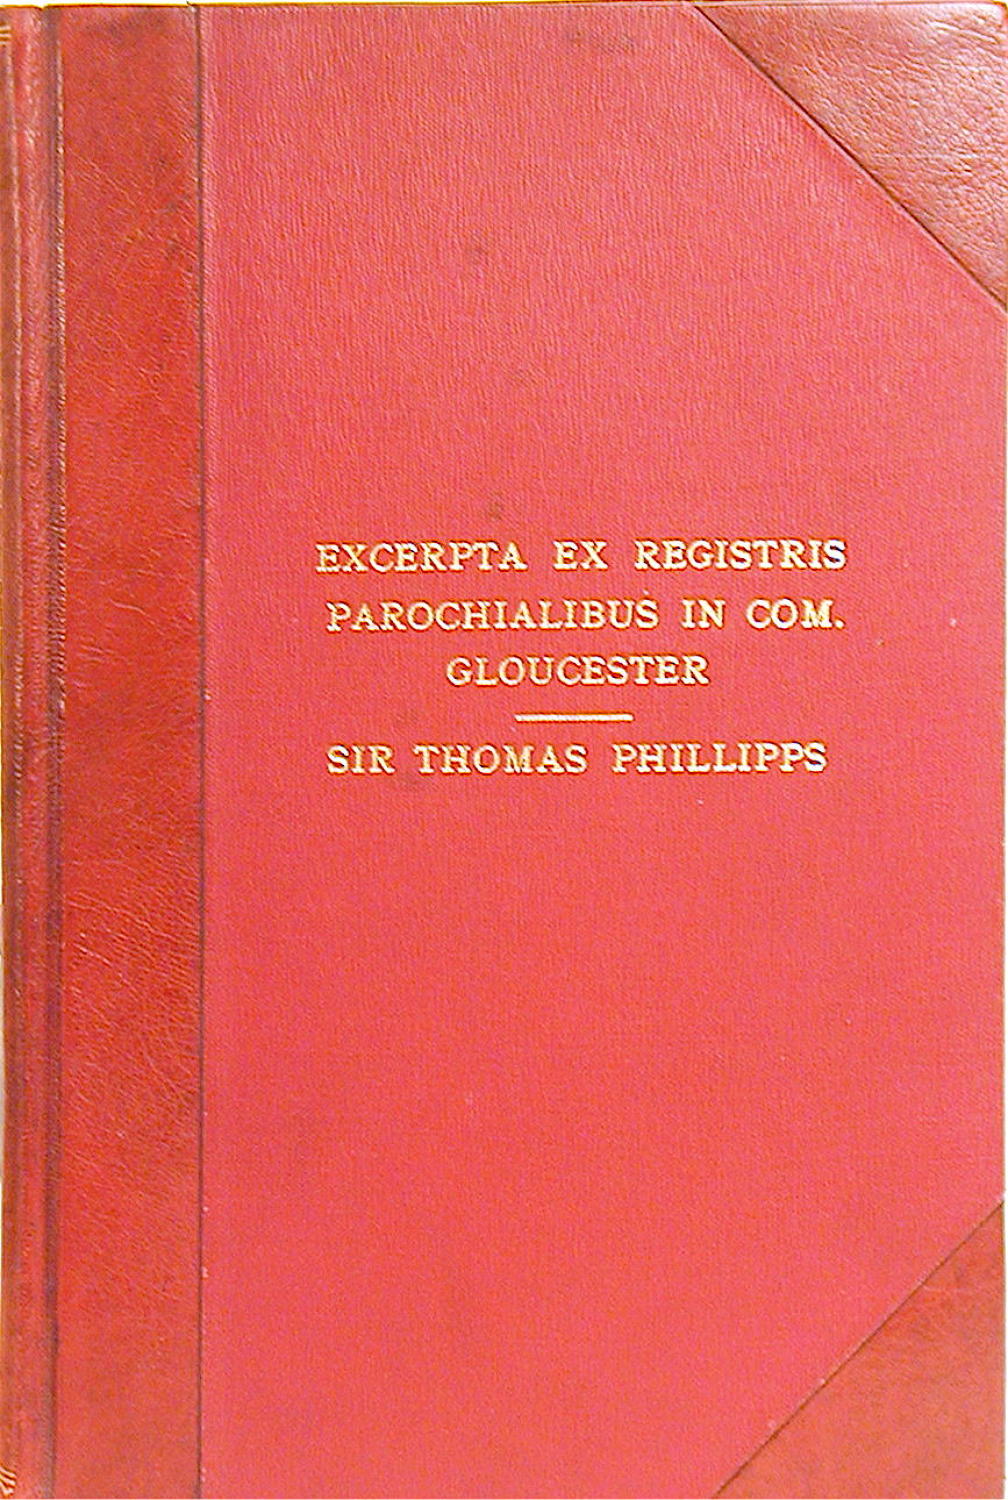 Transcripts of Parish registers of Gloucestershire, 1854